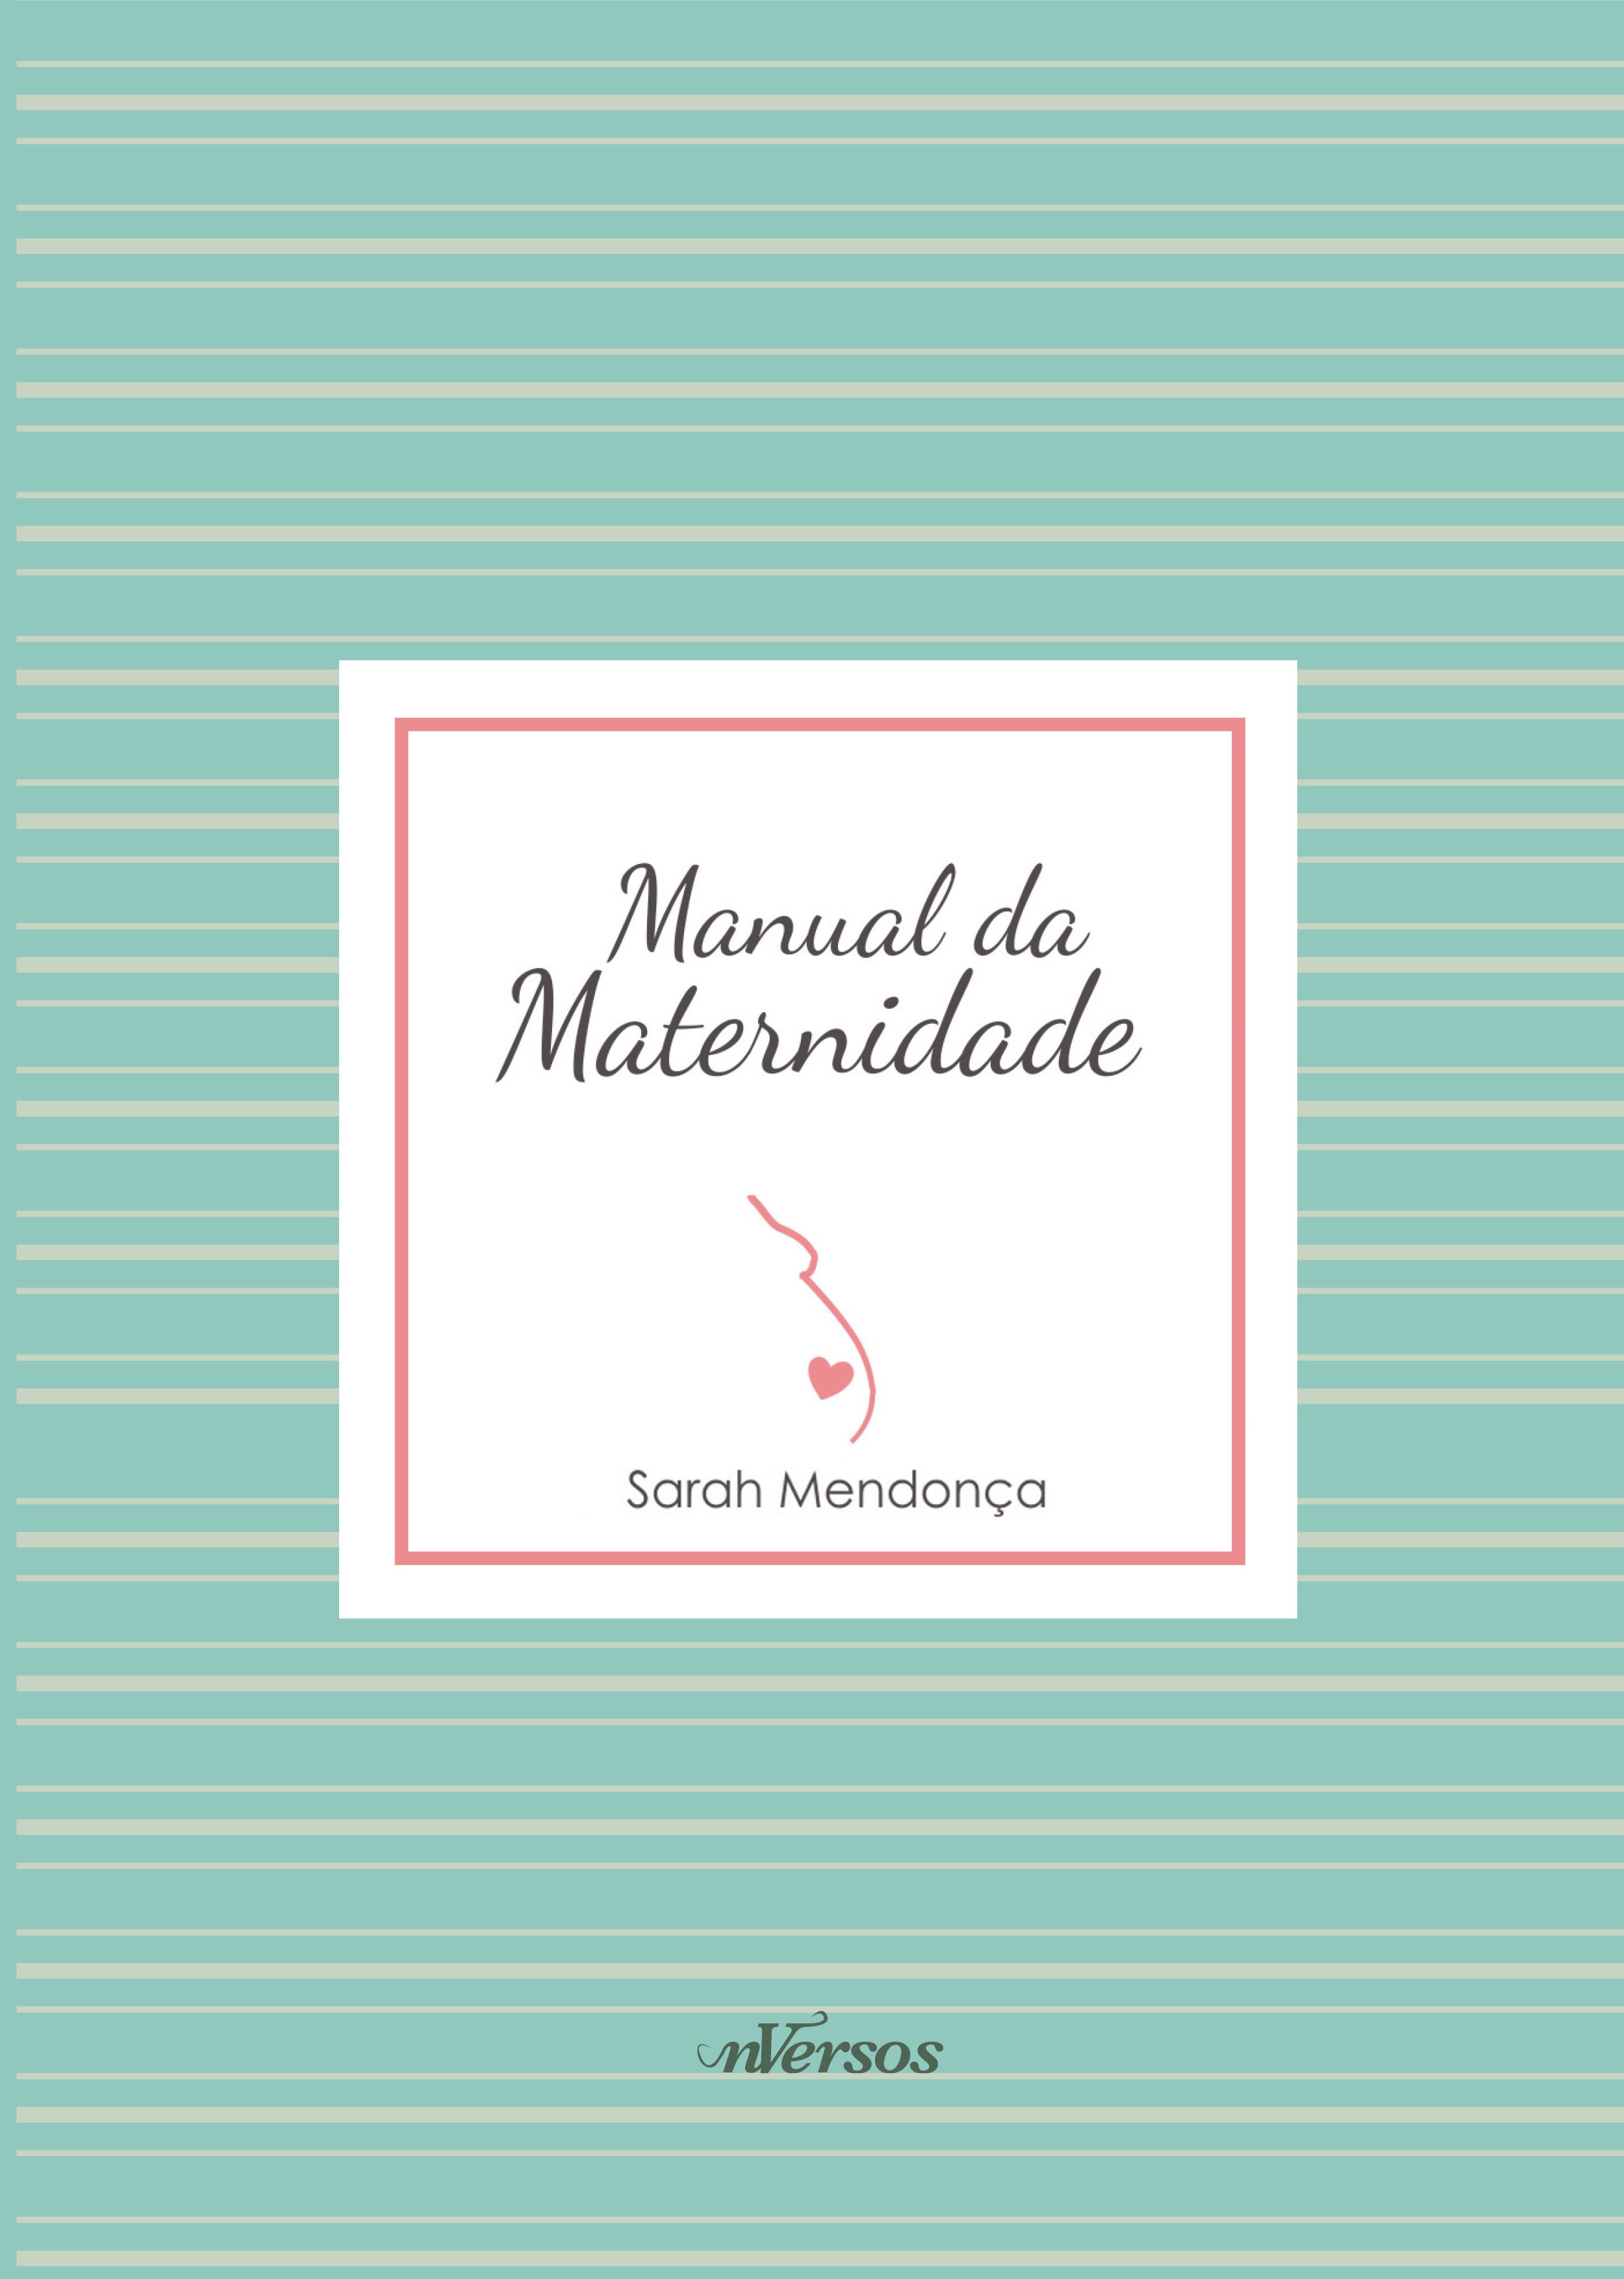 Manual da maternidade